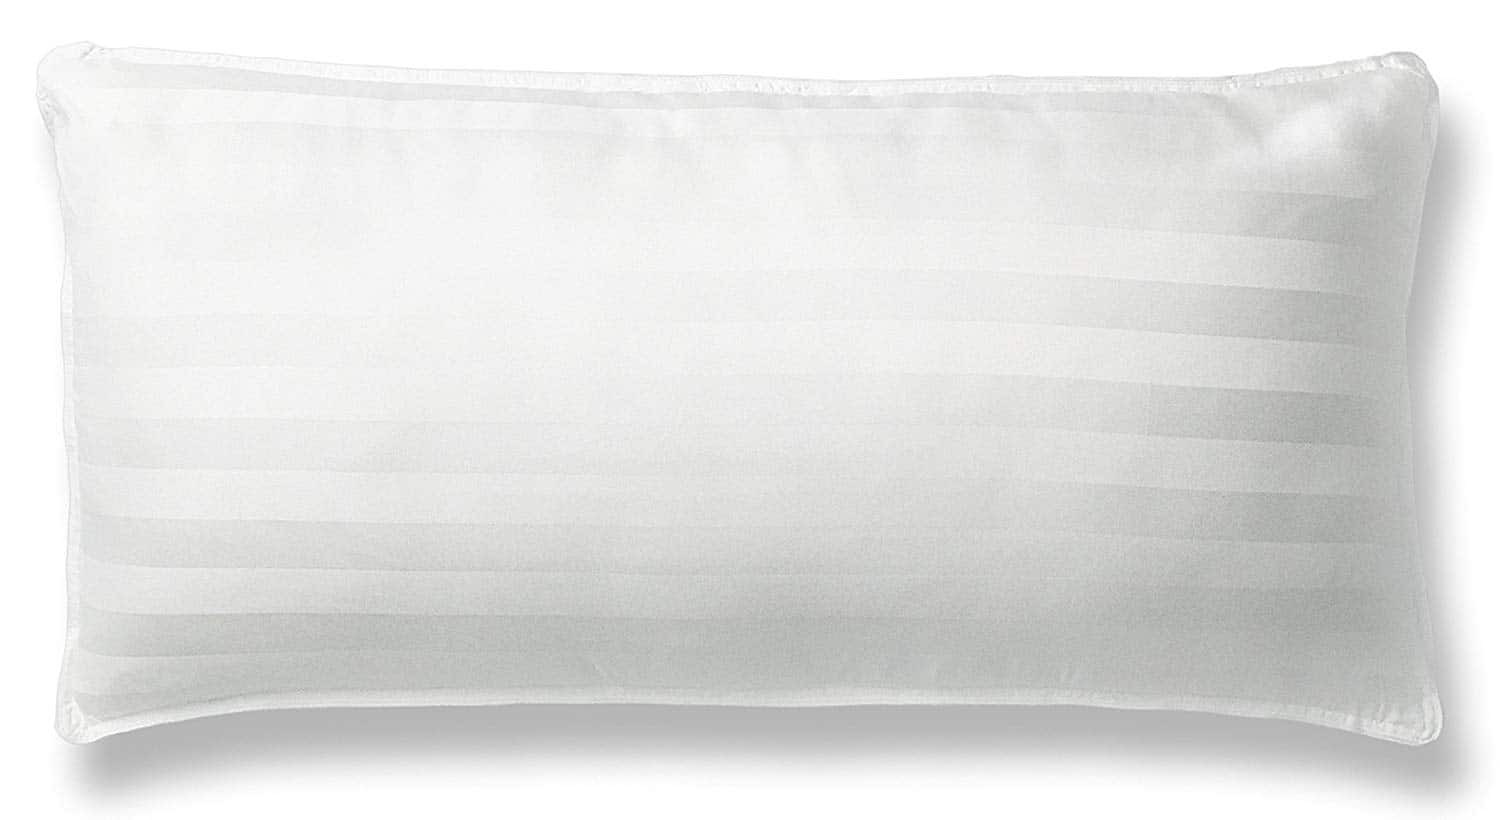 Xtreme Comforts 100% Bamboo Pillow